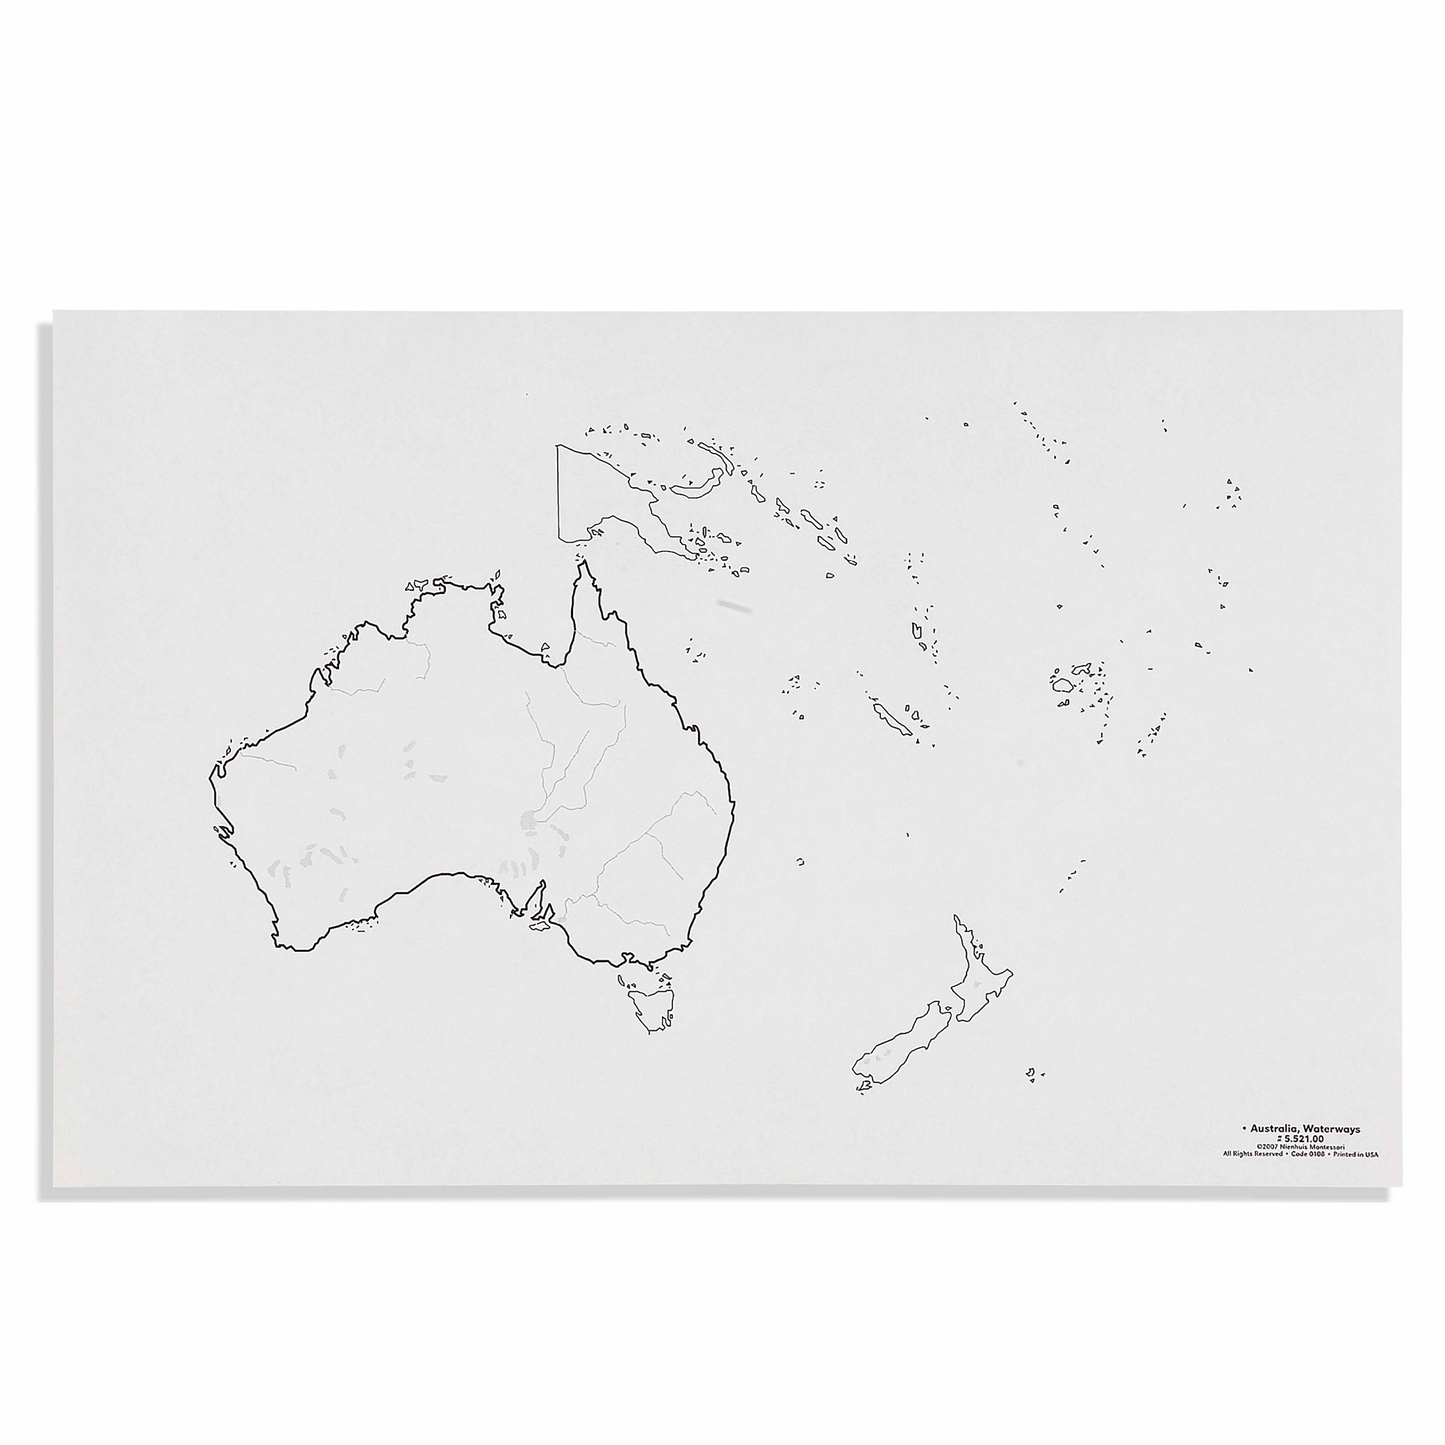 Waterways of Australia - Oceania x 50 - Nienhuis AMI